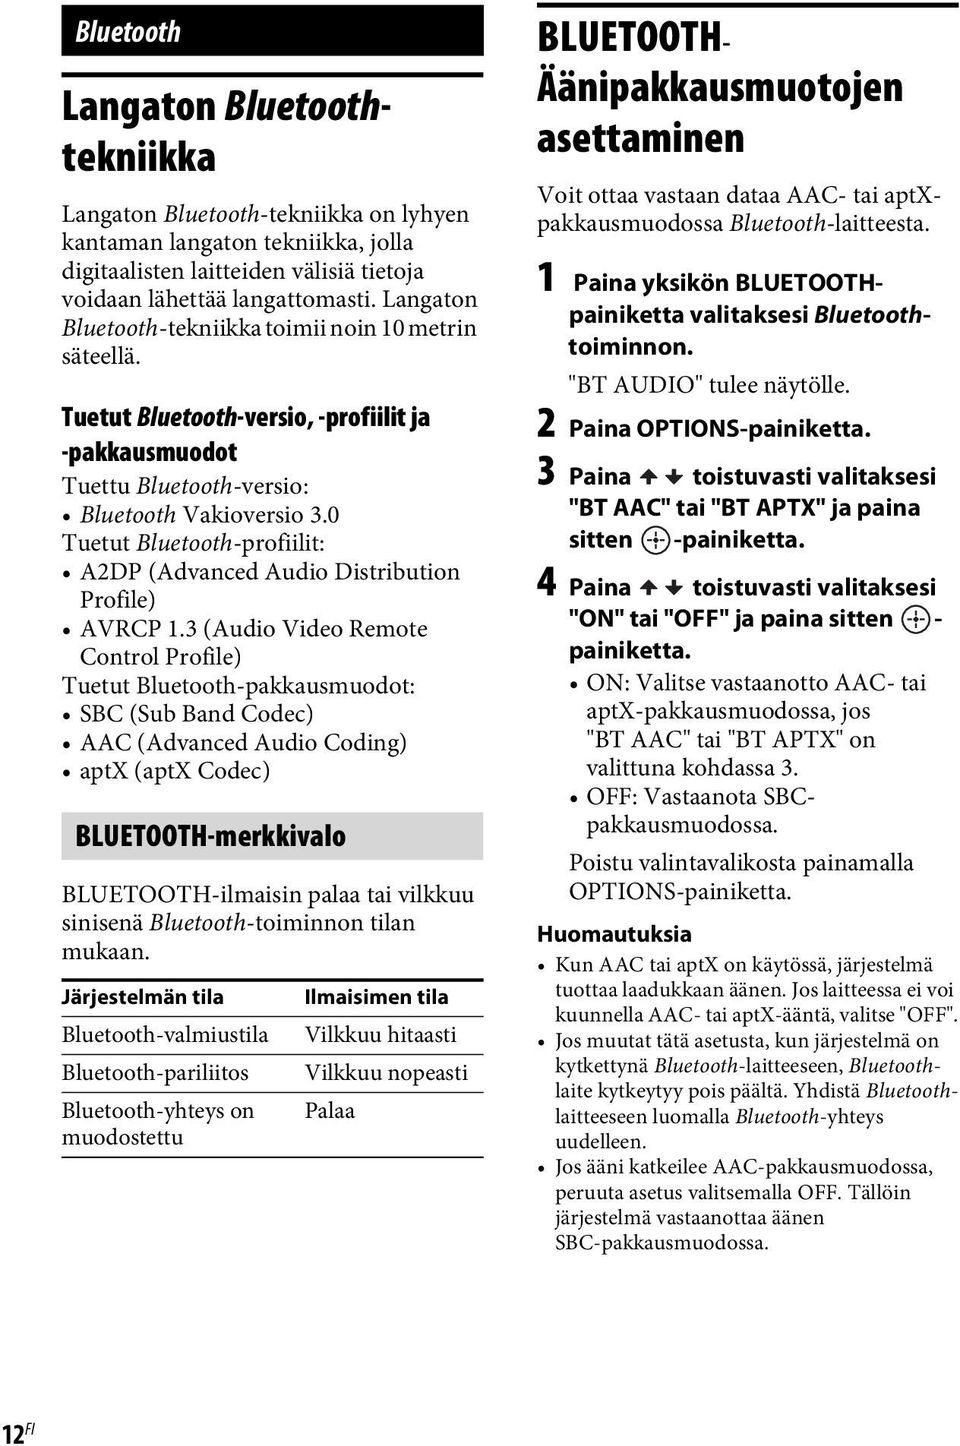 0 Tuetut Bluetooth-profiilit: A2DP (Advanced Audio Distribution Profile) AVRCP 1.